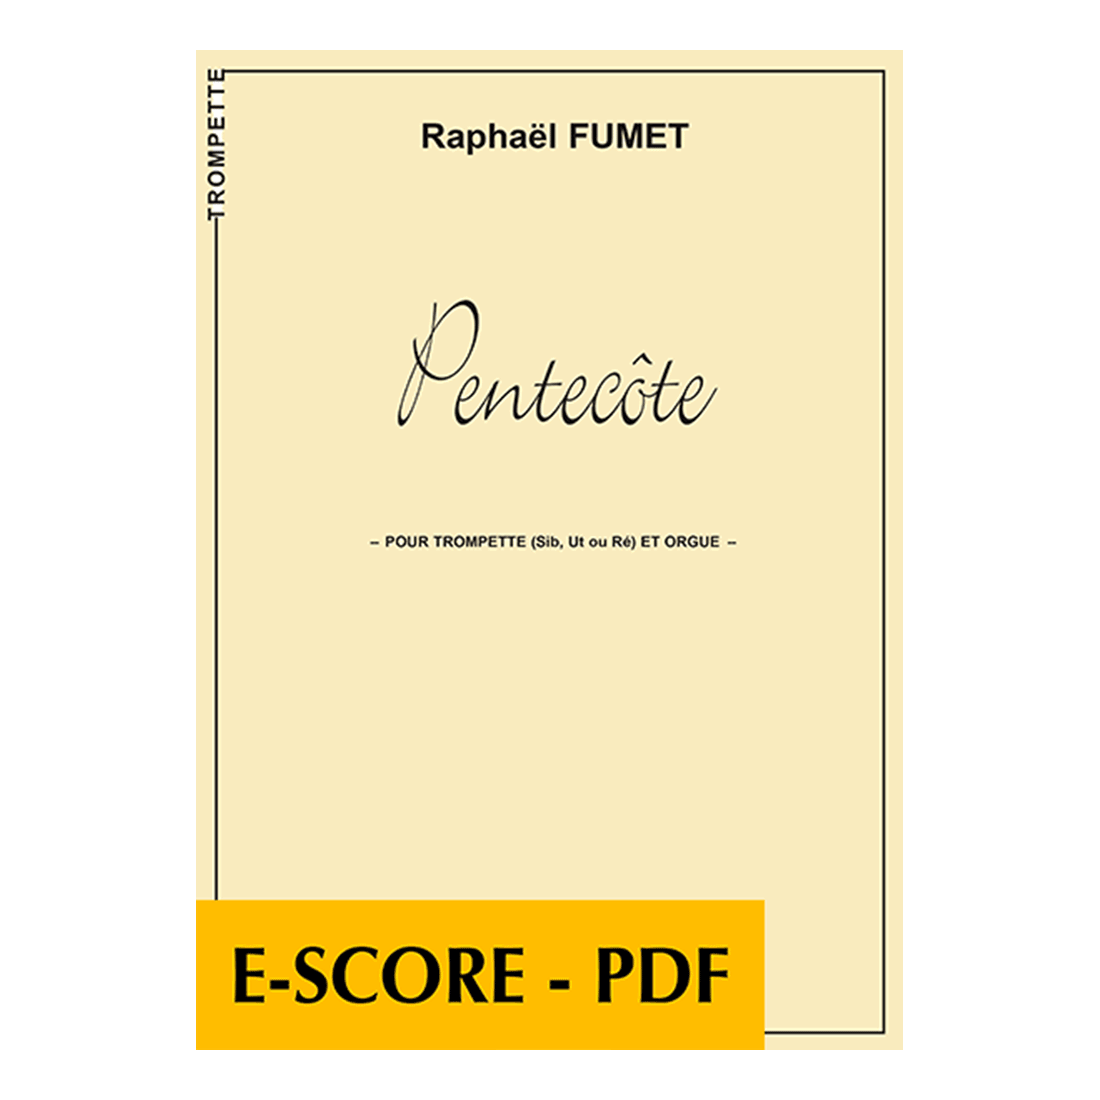 Pentecôte für Trompete und Orgel - E-score PDF